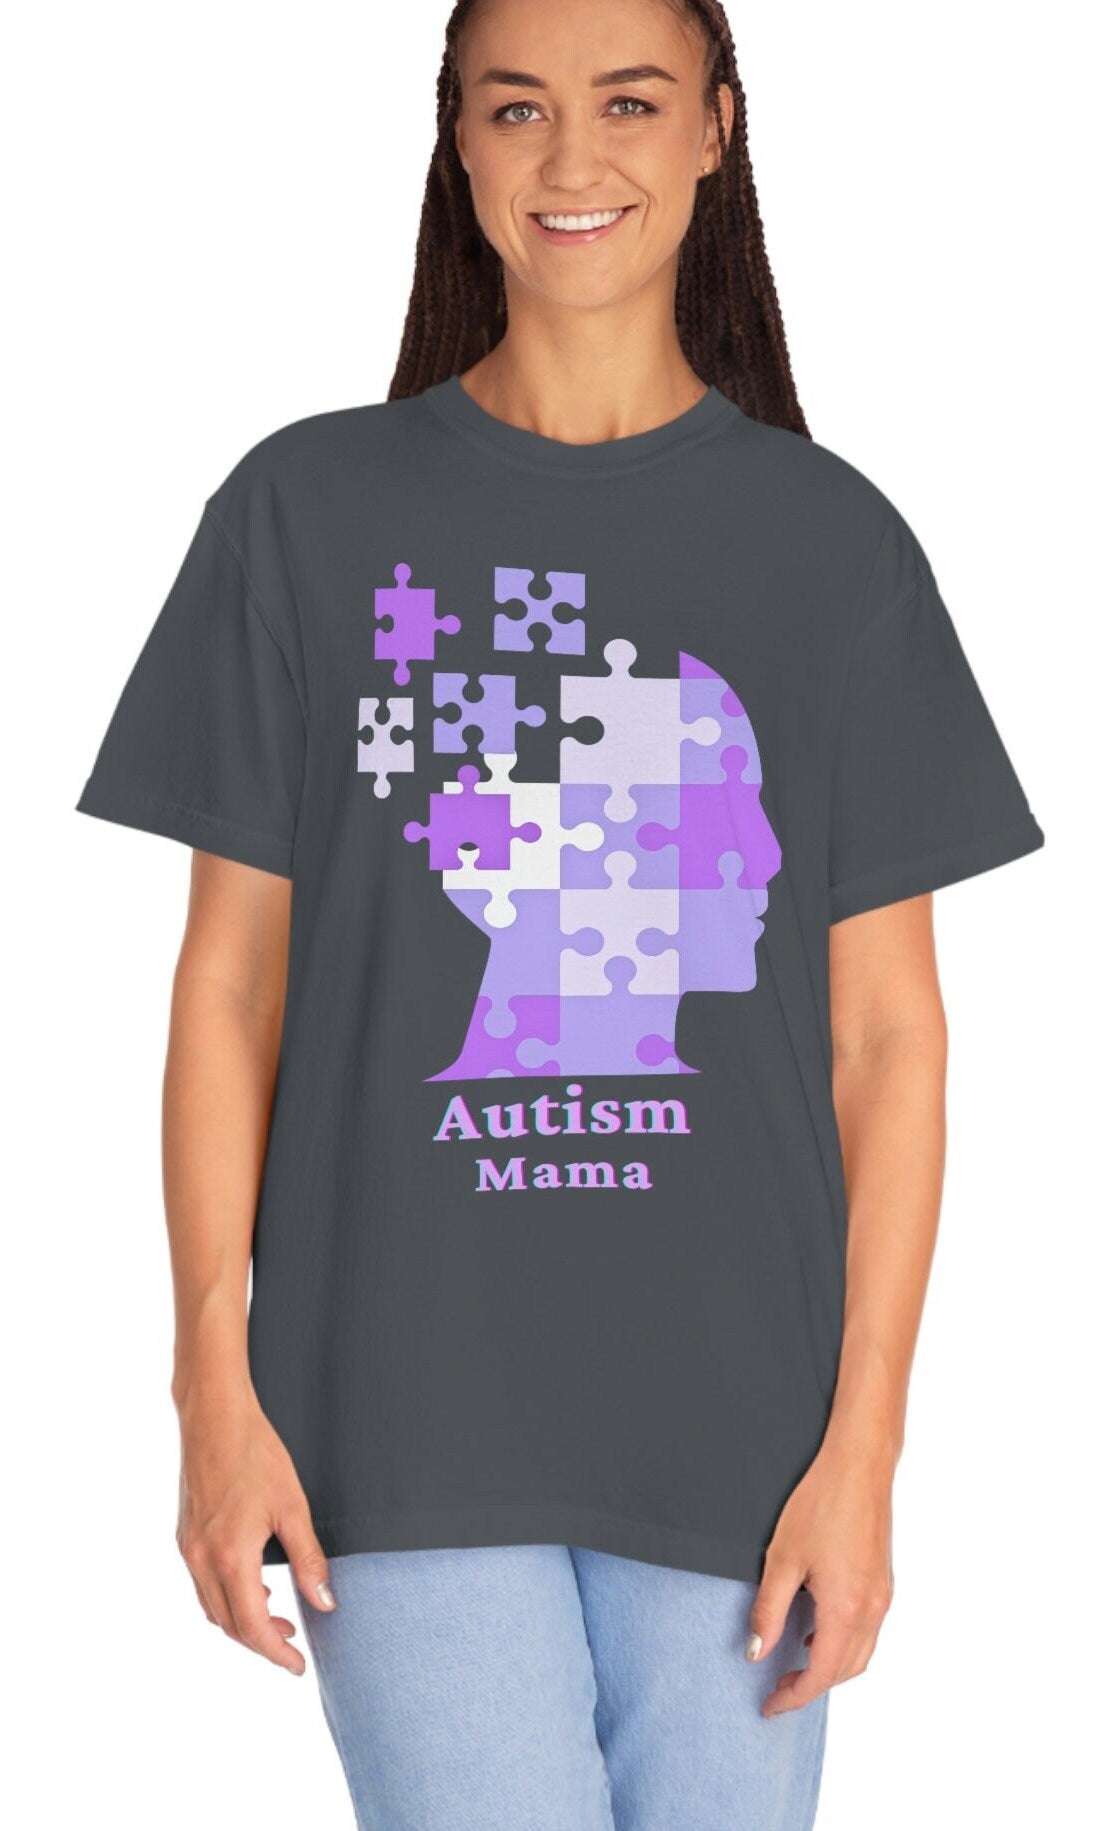 Comfort Colors Autism Mom Shirt, Autism Awareness, Autism Mother, Autism Mom Gift, Autism Acceptance, Autism Support Shirt